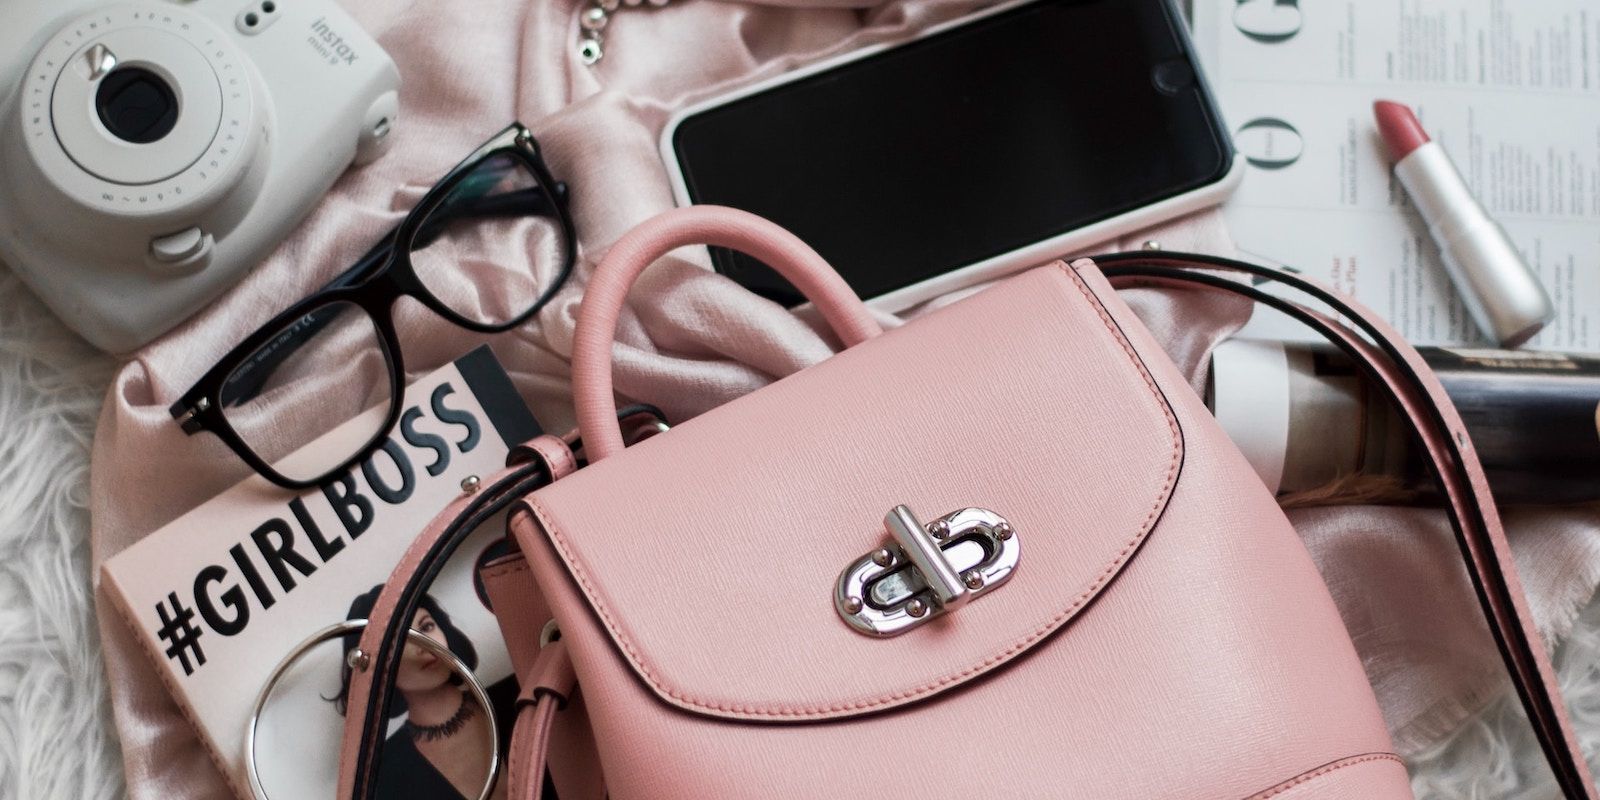 Dompet Kecil Merah Muda Di Samping Lipstik, Majalah, Kacamata, dan iPhone